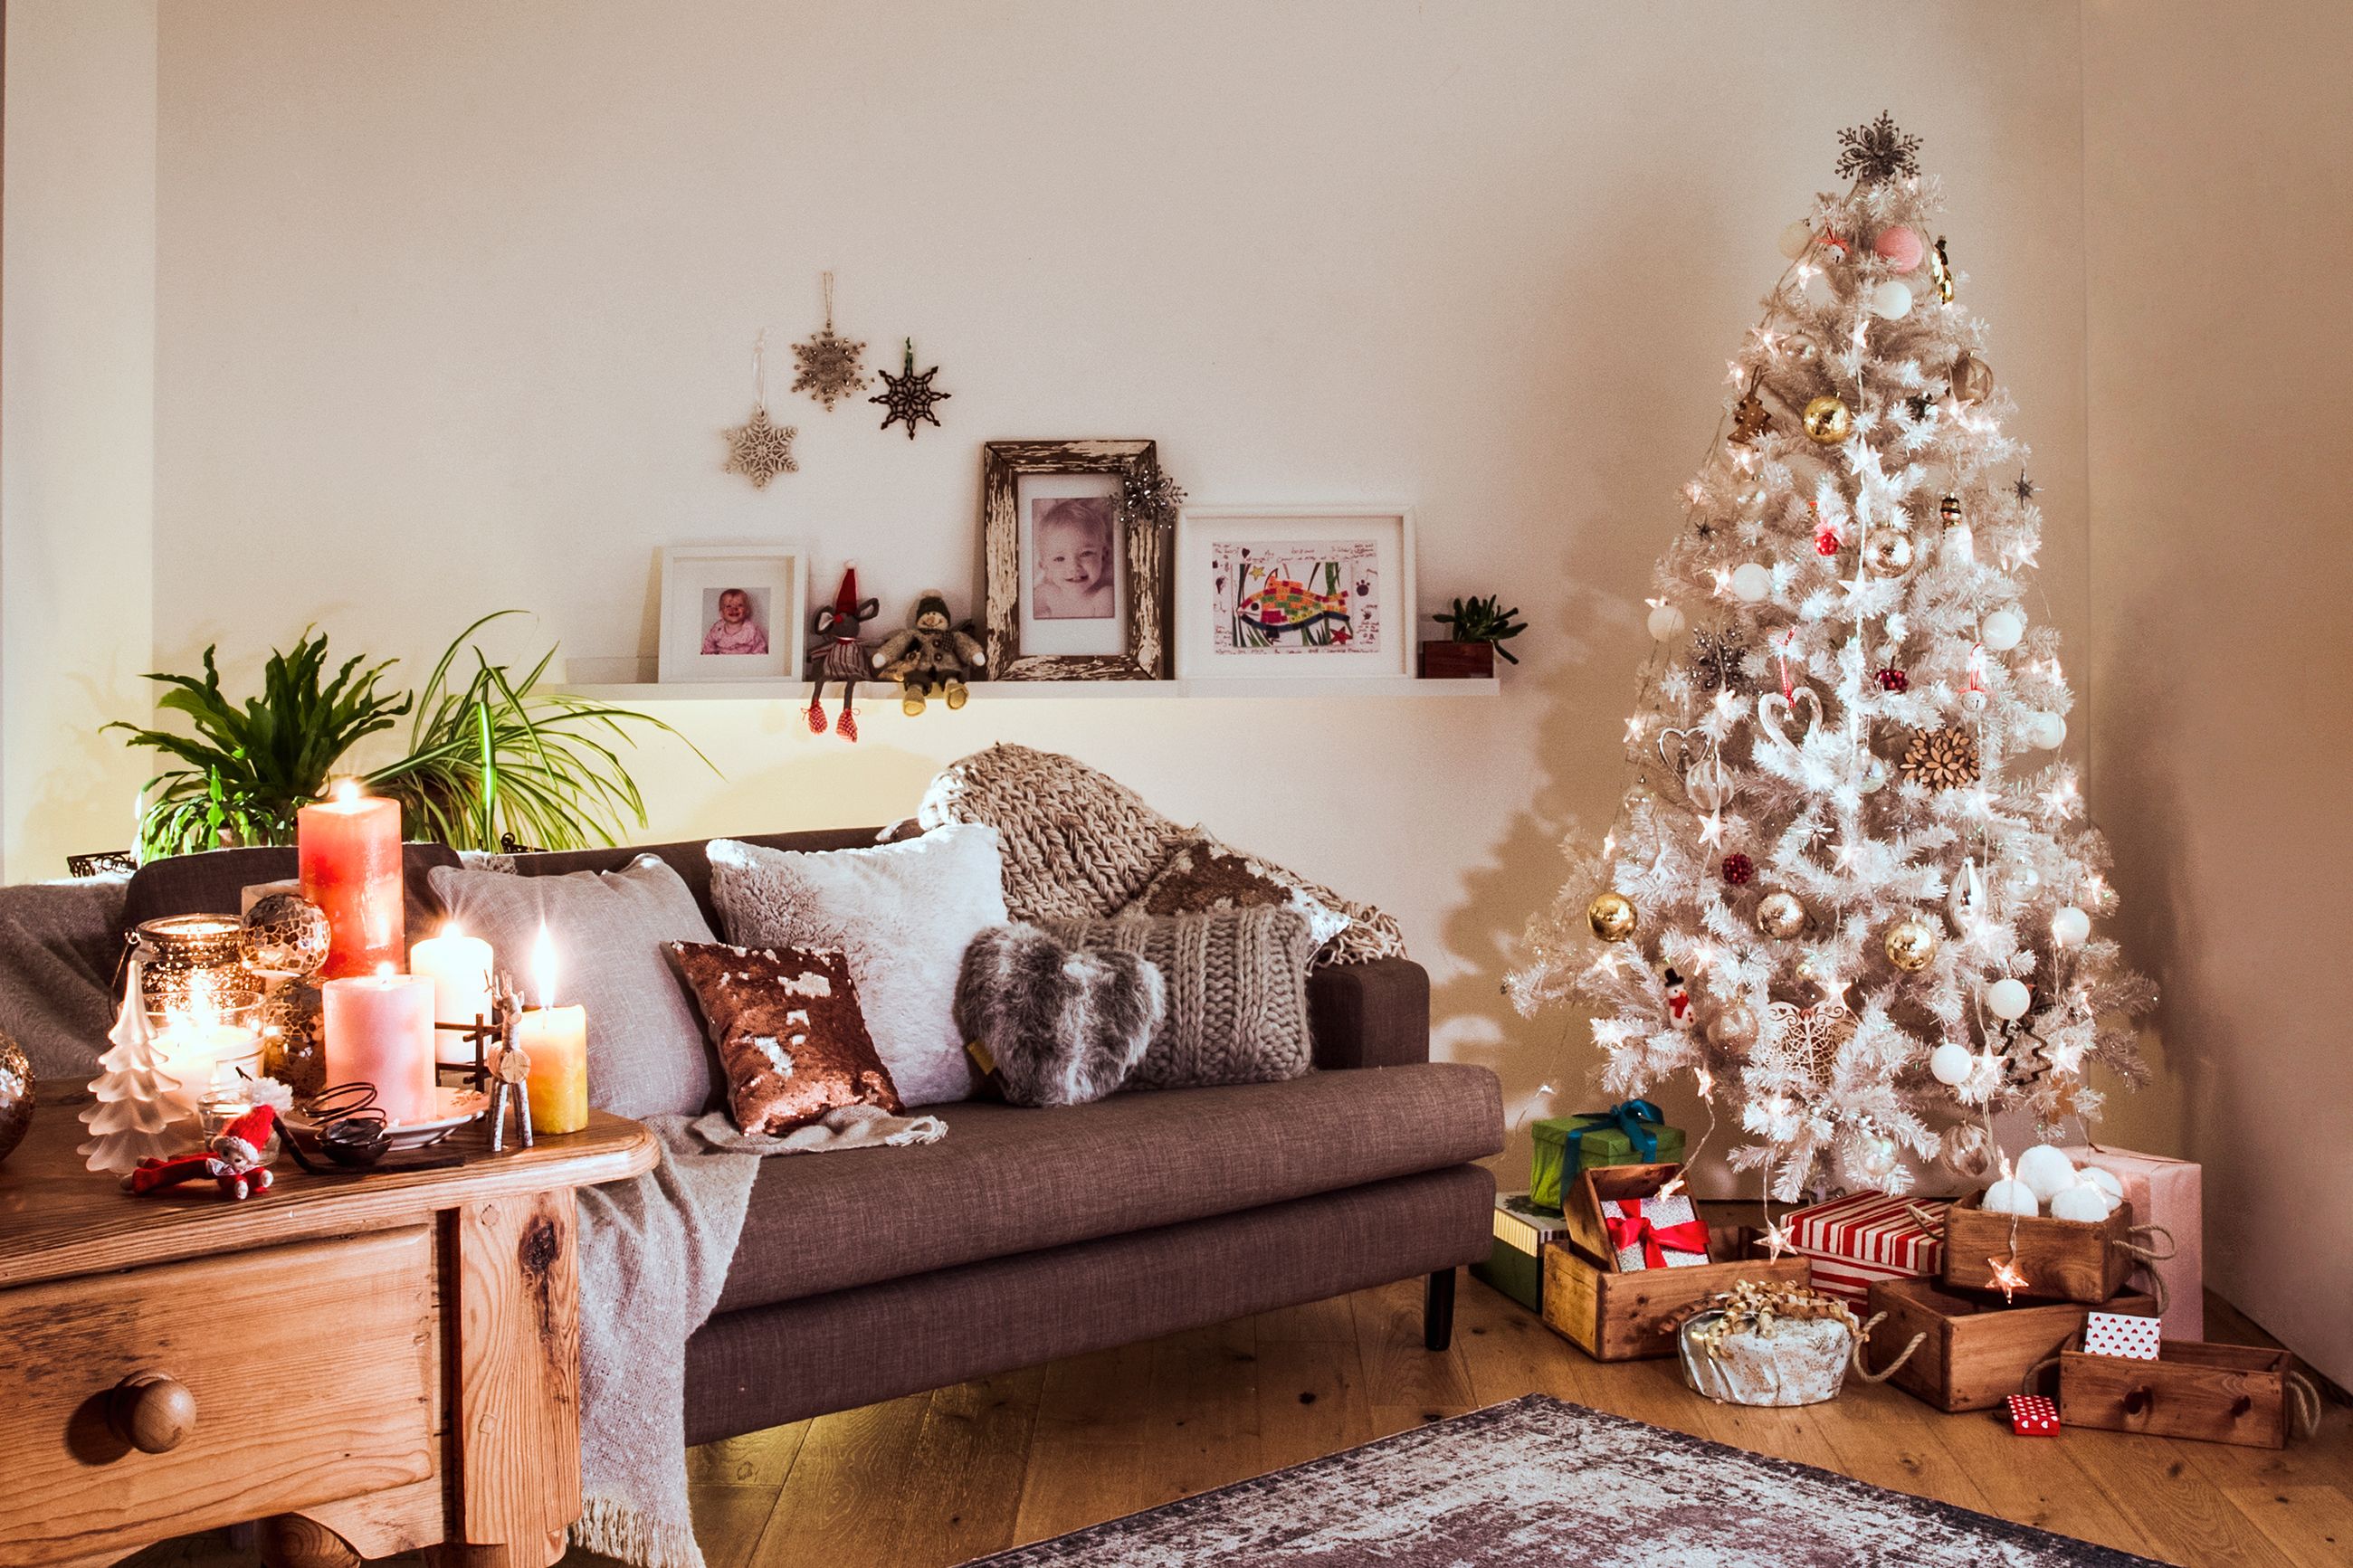 9 Styles Cute Christmas Mini Trees Desk table Decor Home Party Xmas Ornaments 